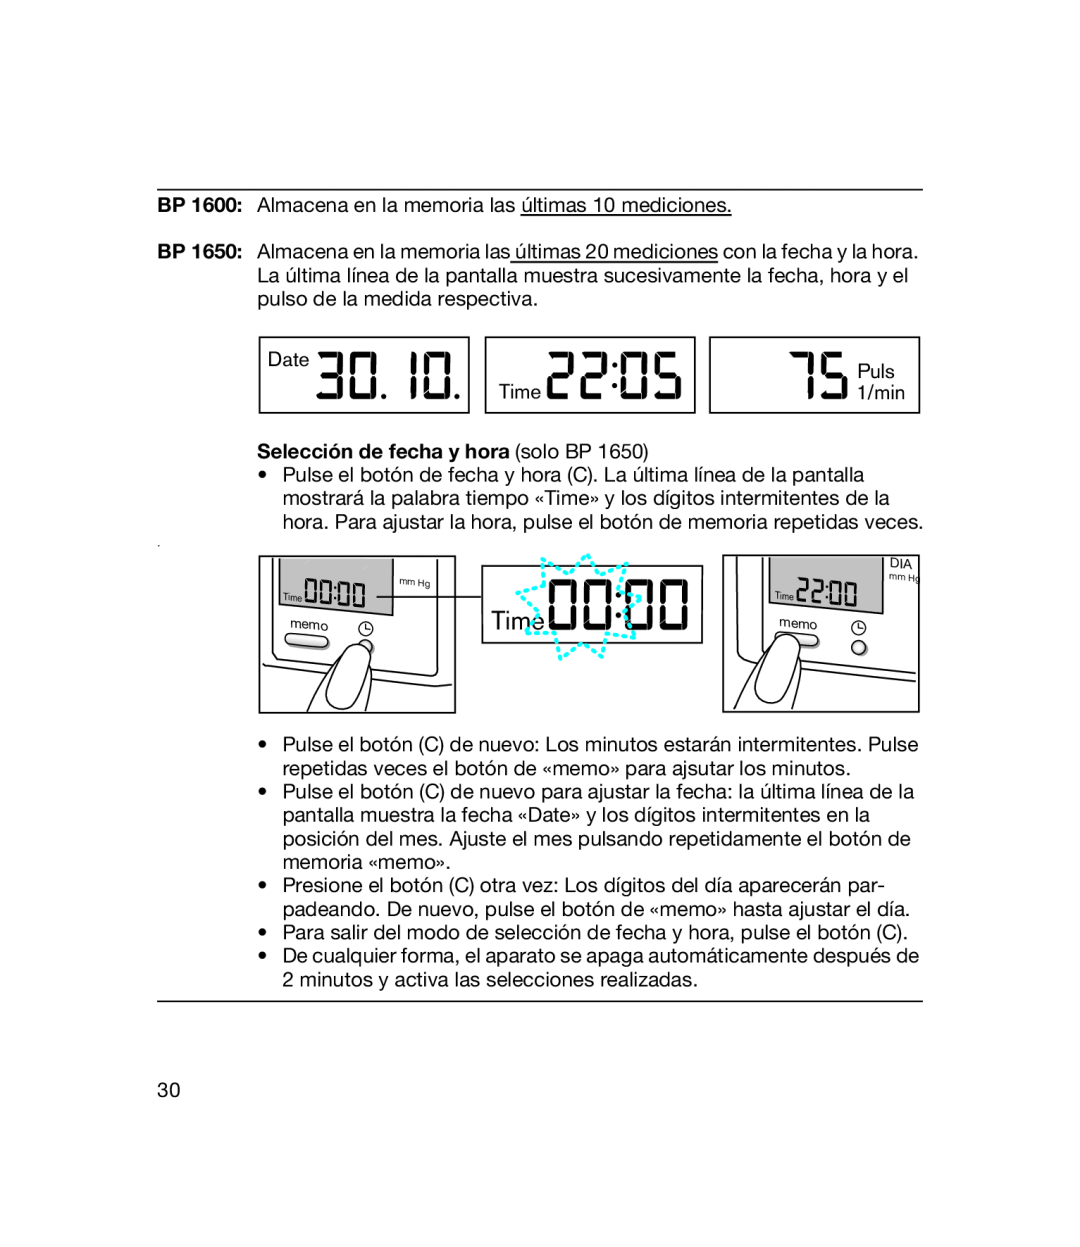 Braun bp1600, BP 1650 manual Time, Selección de fecha y hora solo BP 